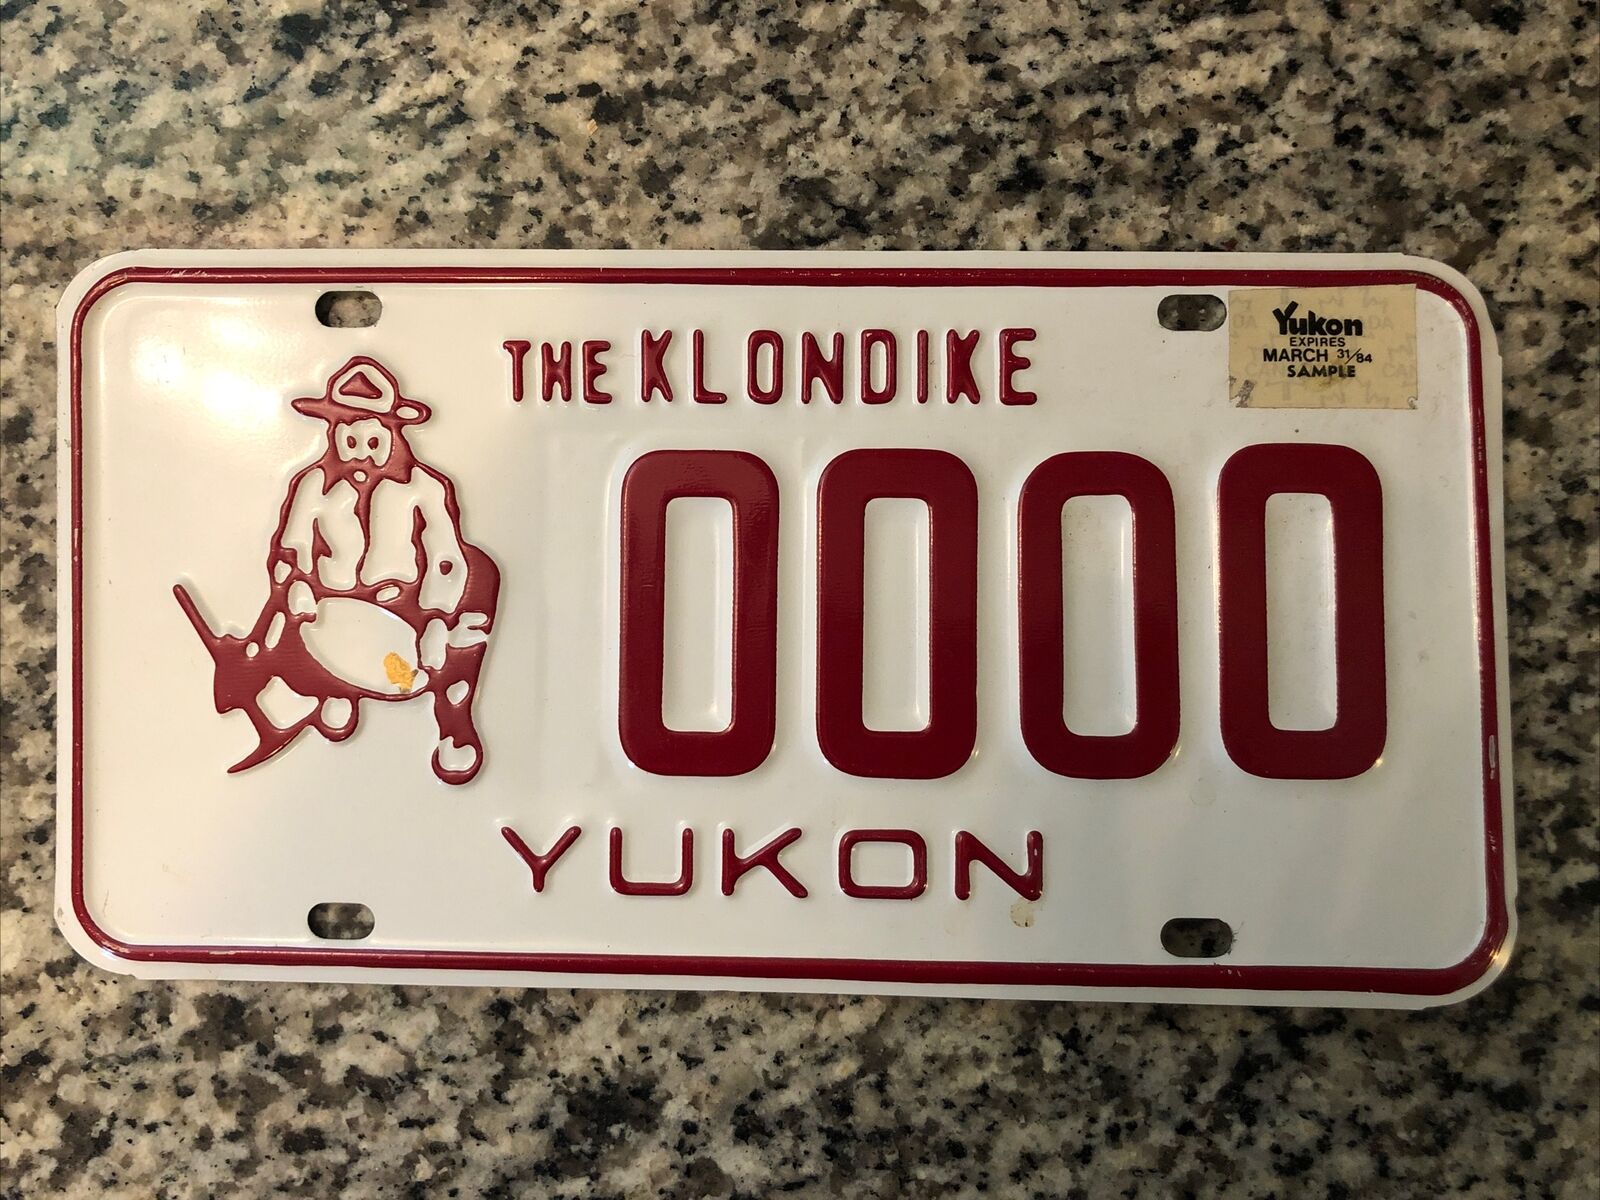 Vintage The Klondike Sample License Plate  #0000 Yukon Gold Miner 1980's